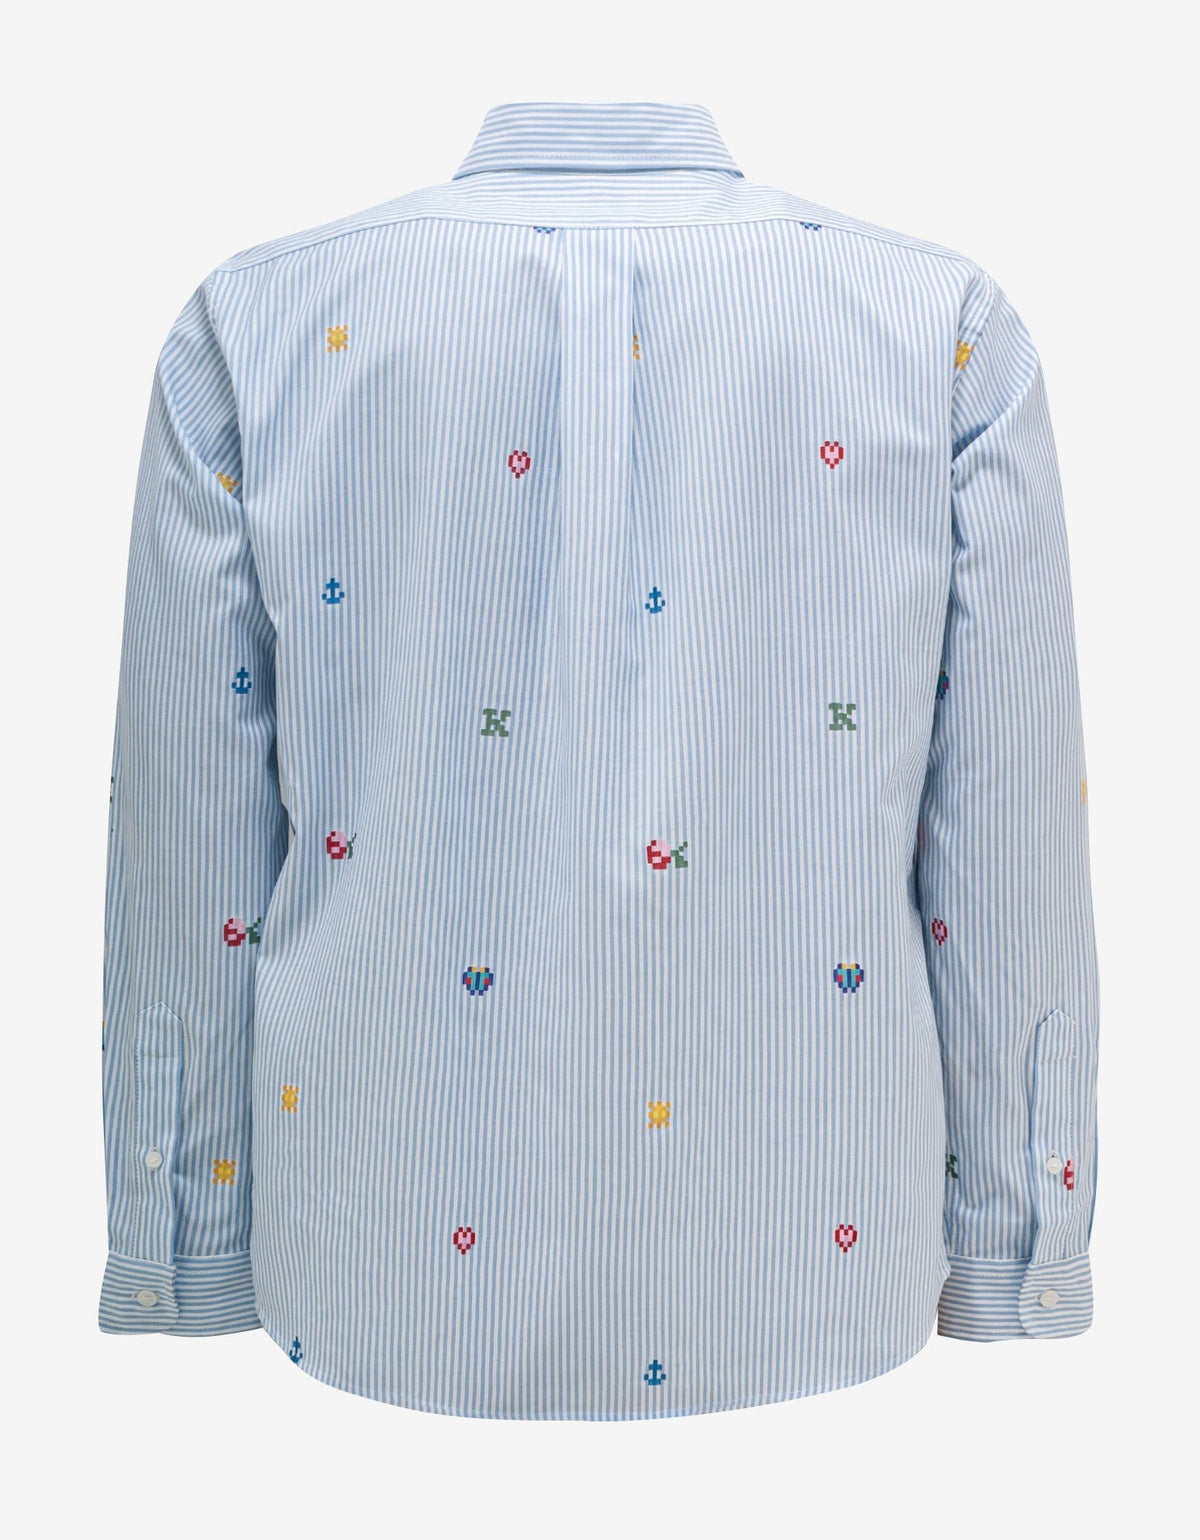 Kenzo Blue 'Kenzo Pixel' Striped Shirt